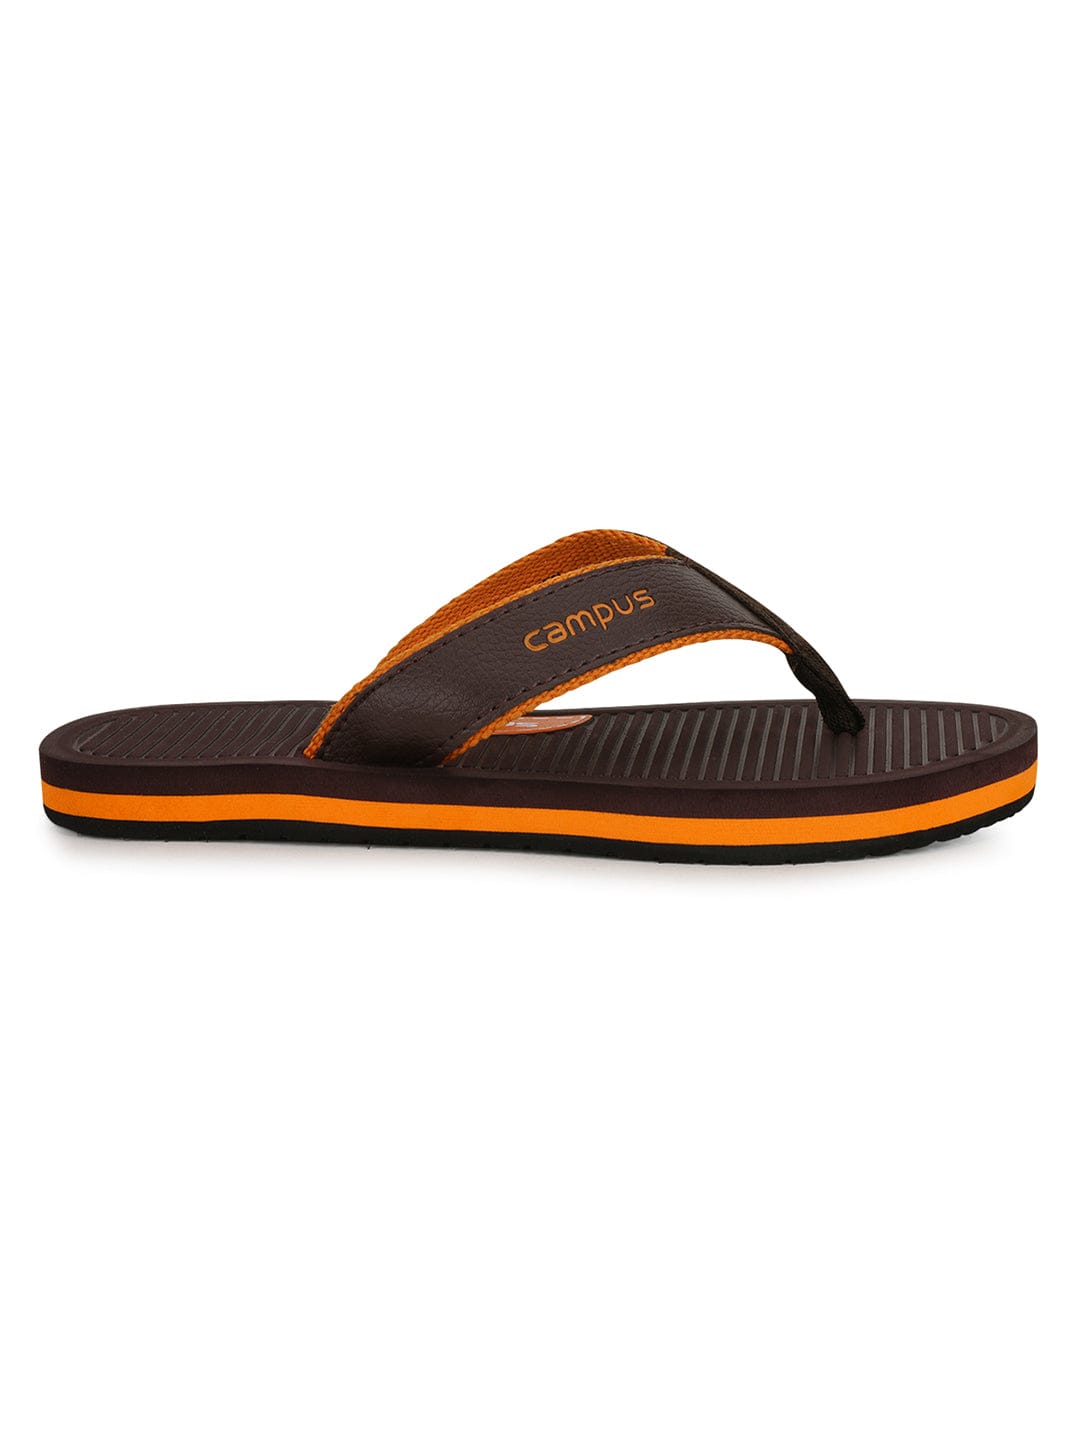 Buy GC-1015 Brown Men's Flip Flop online | Campus Shoes